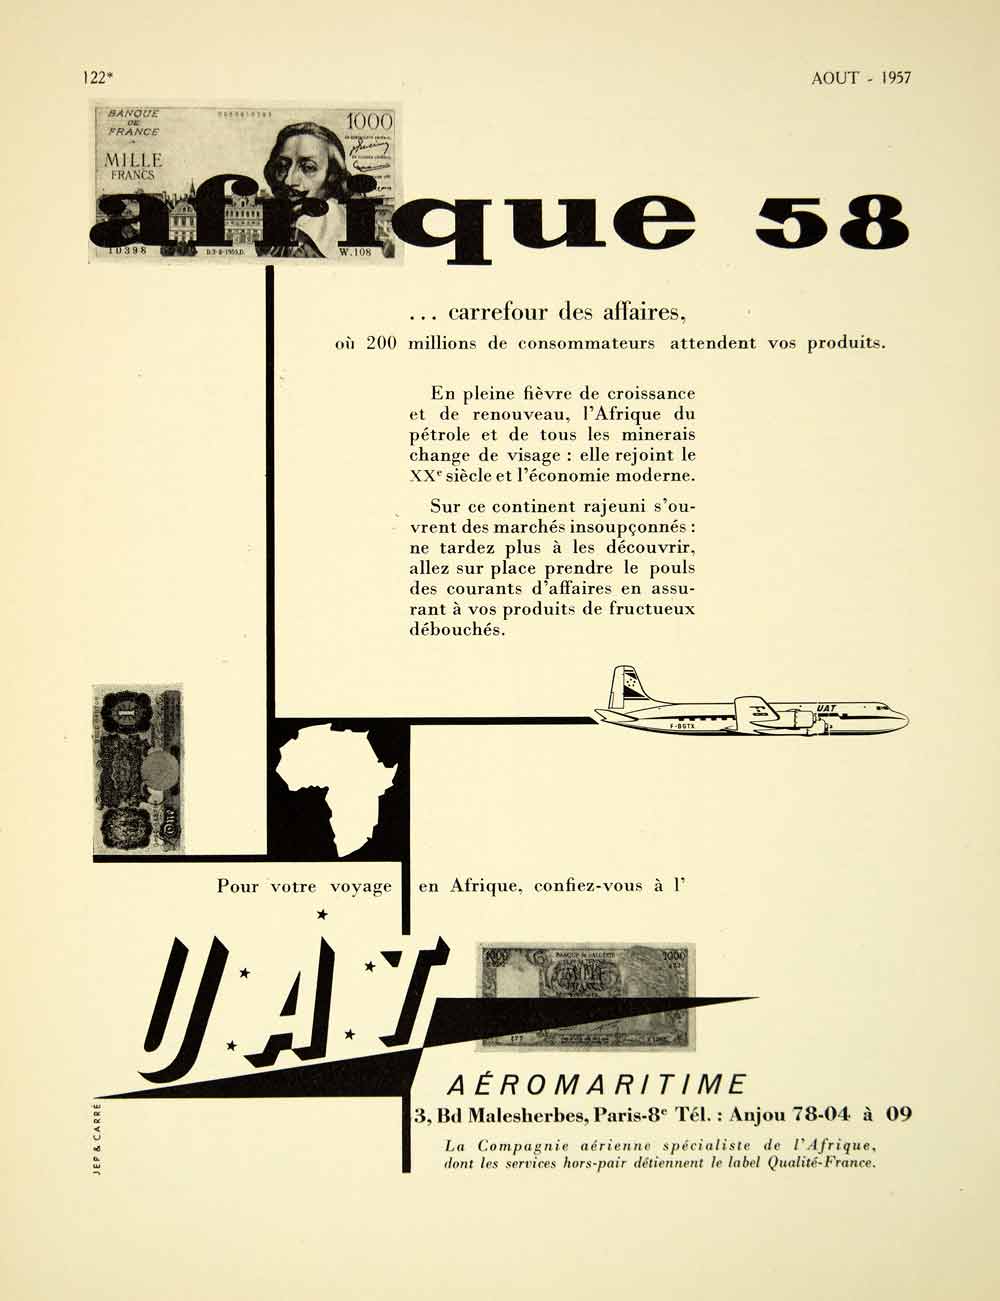 1957 Ad French Advertisement UAT Aeromaritime France Jep Carre Africa VENA6